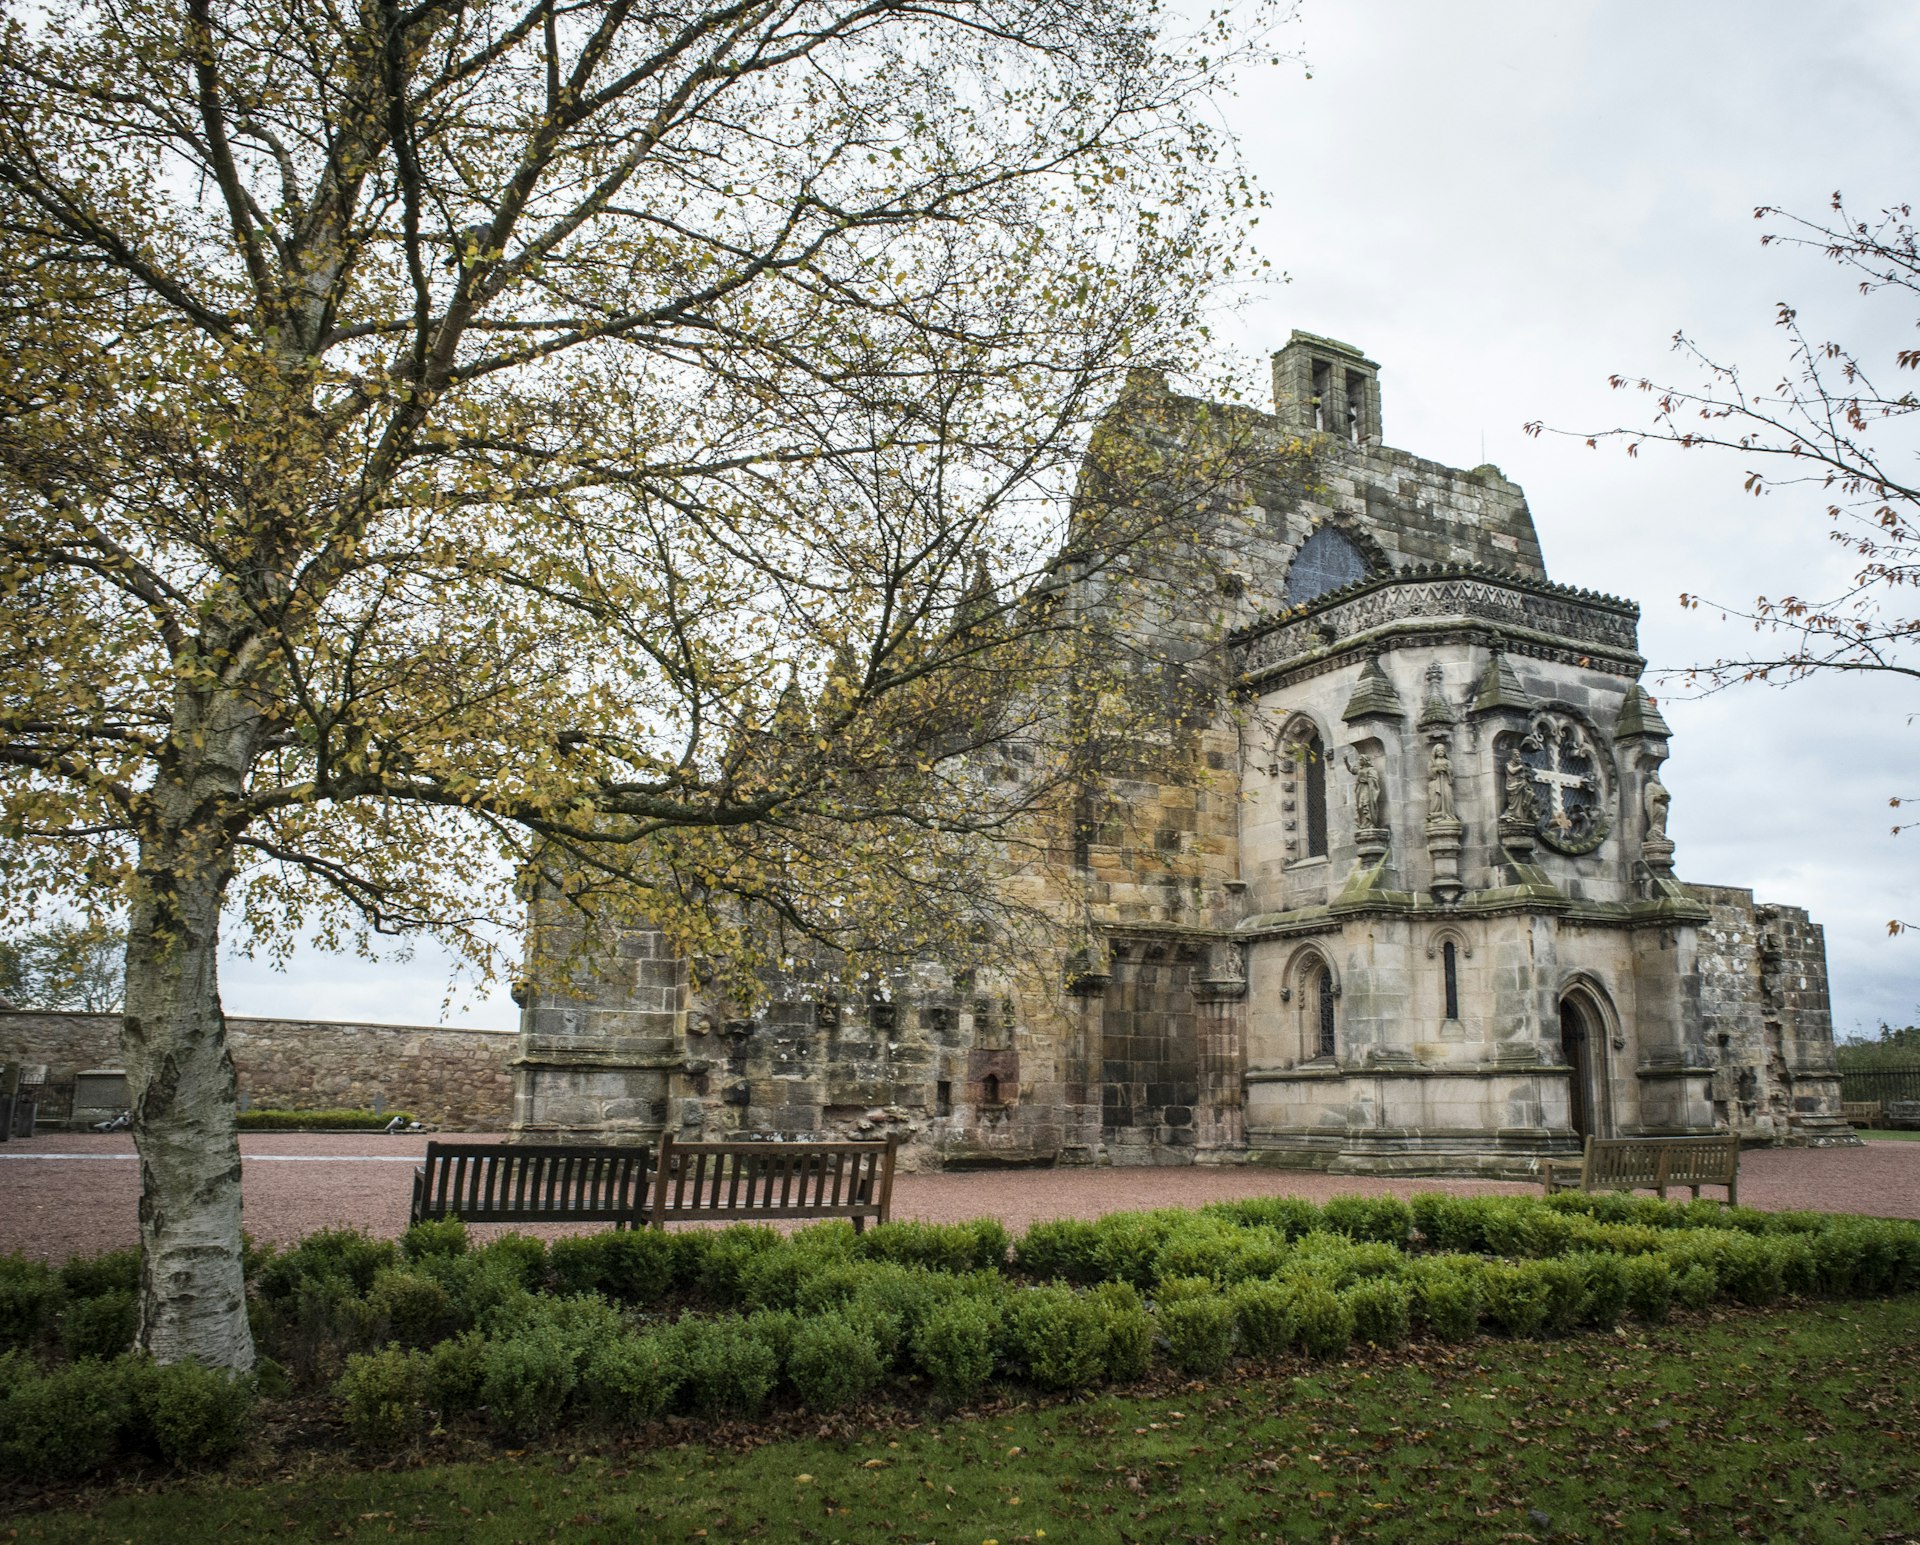 Rosslyn Chapel near Edinburgh, Scotland as pictured behind trees